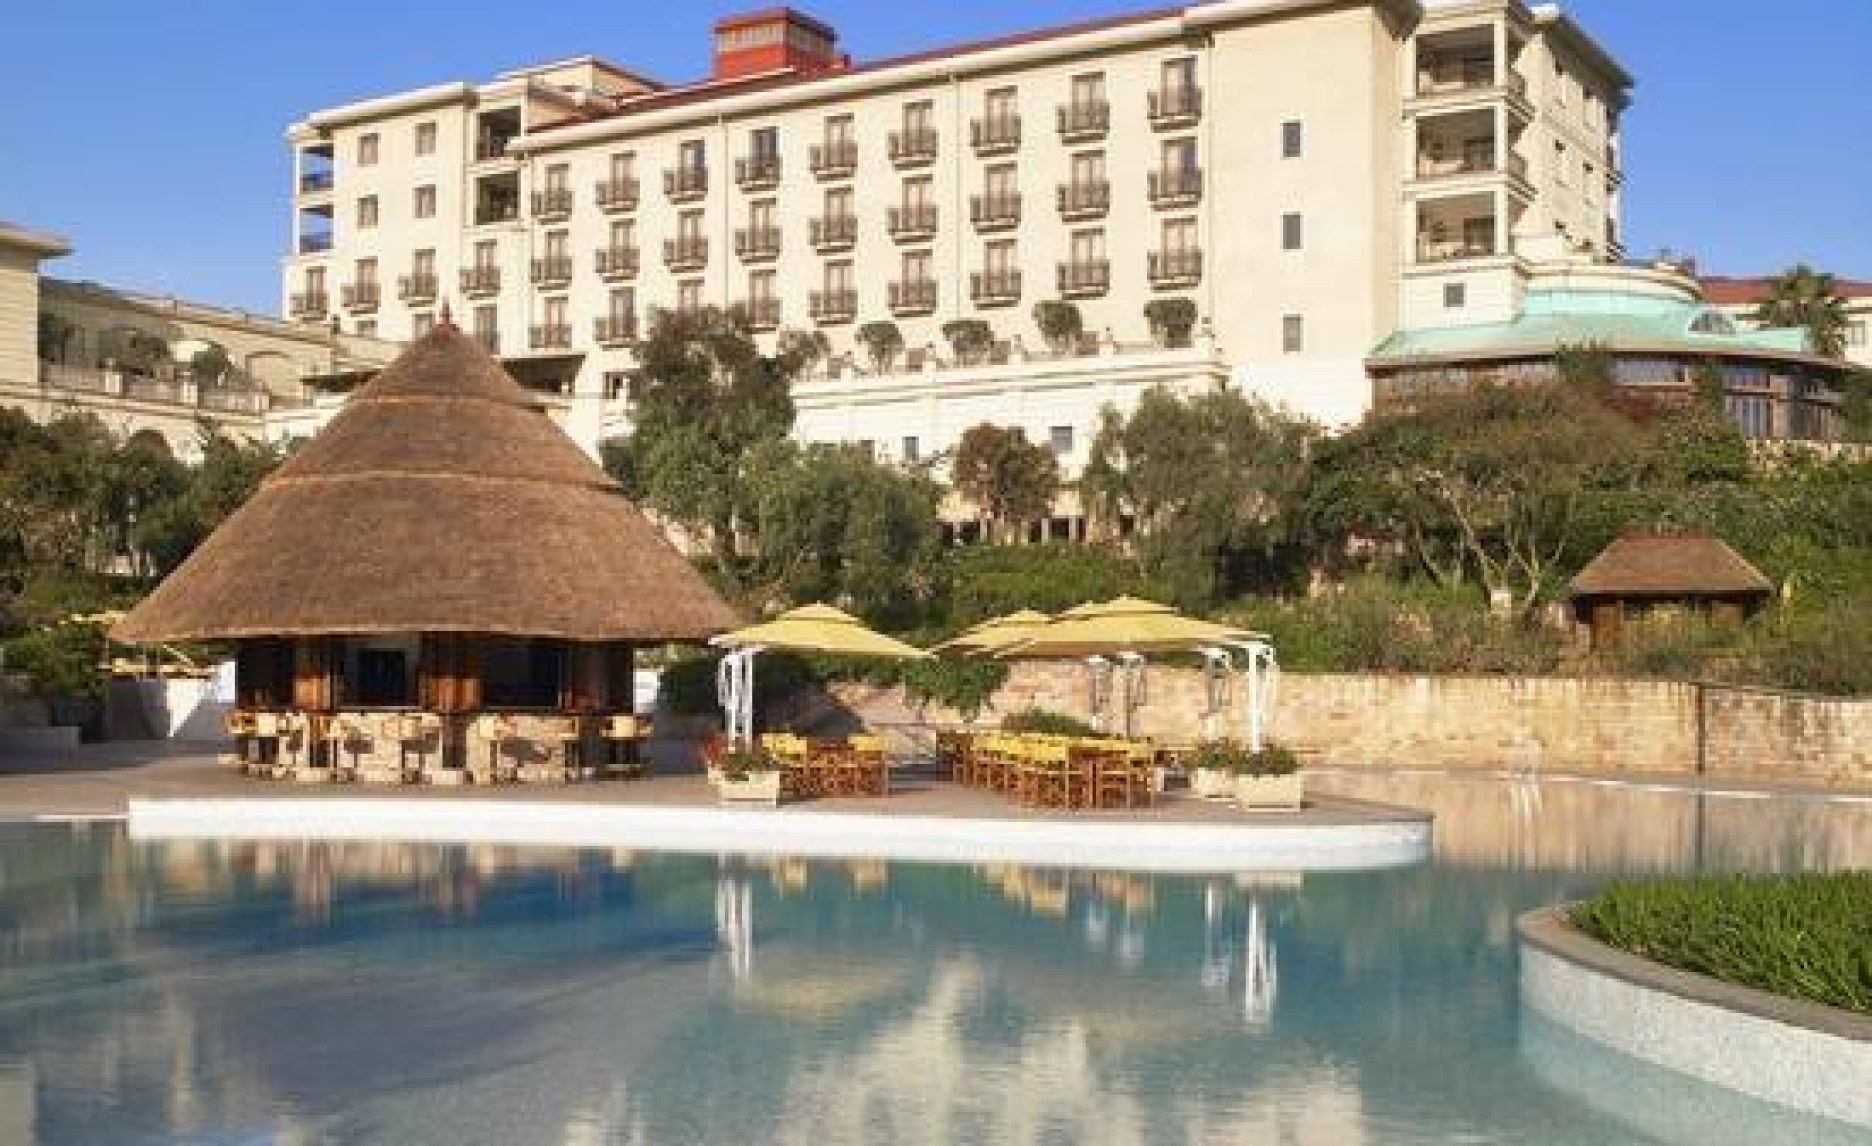 ethiopia tourism and hotel market association